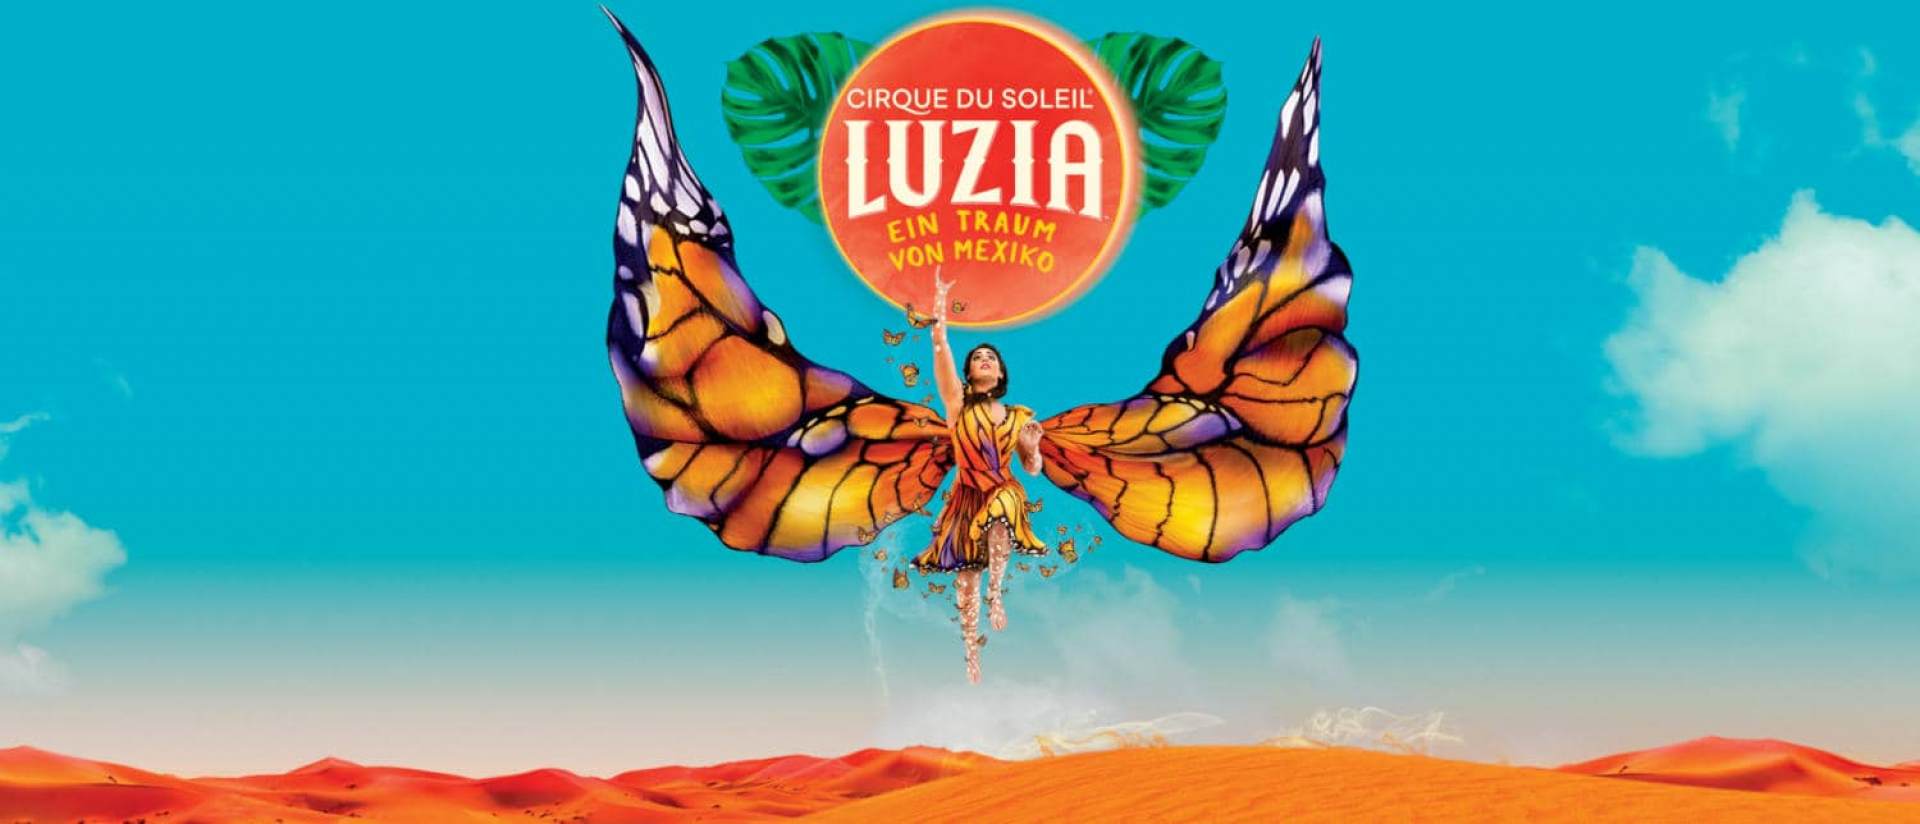 Cirque du Soleil - LUZIA